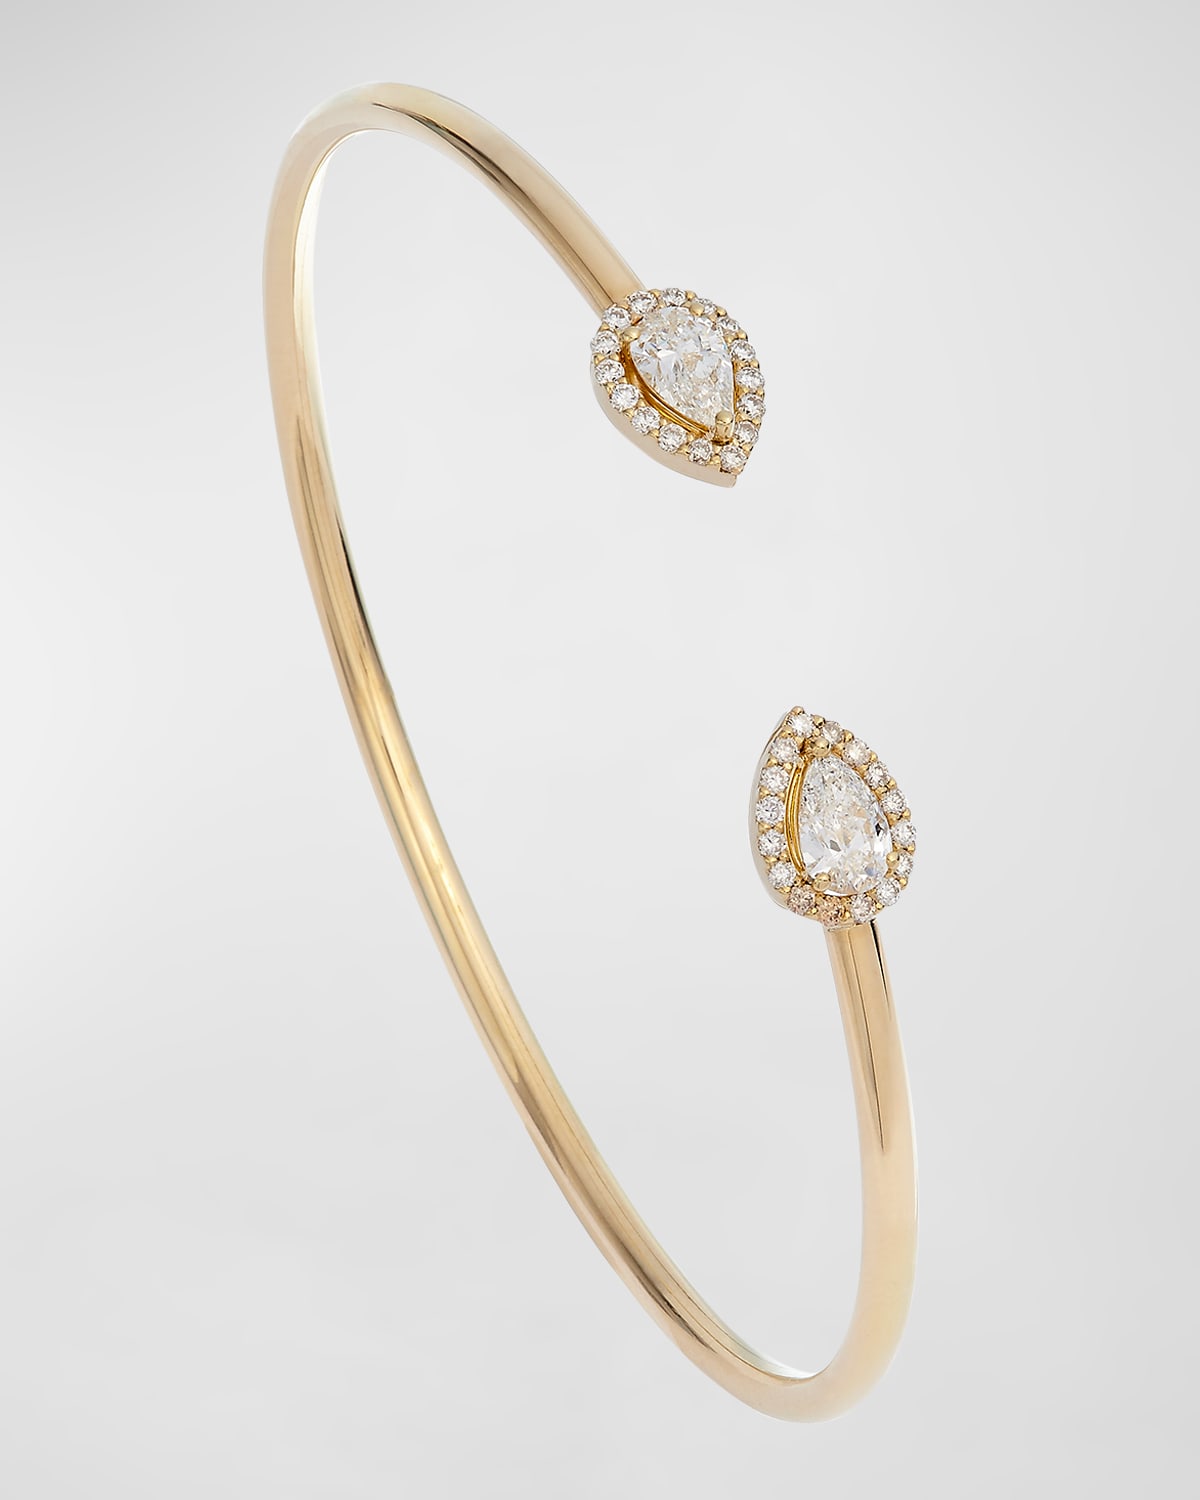 Krisonia 18k Yellow Gold Cuff Bracelet With Pear-cut Diamonds